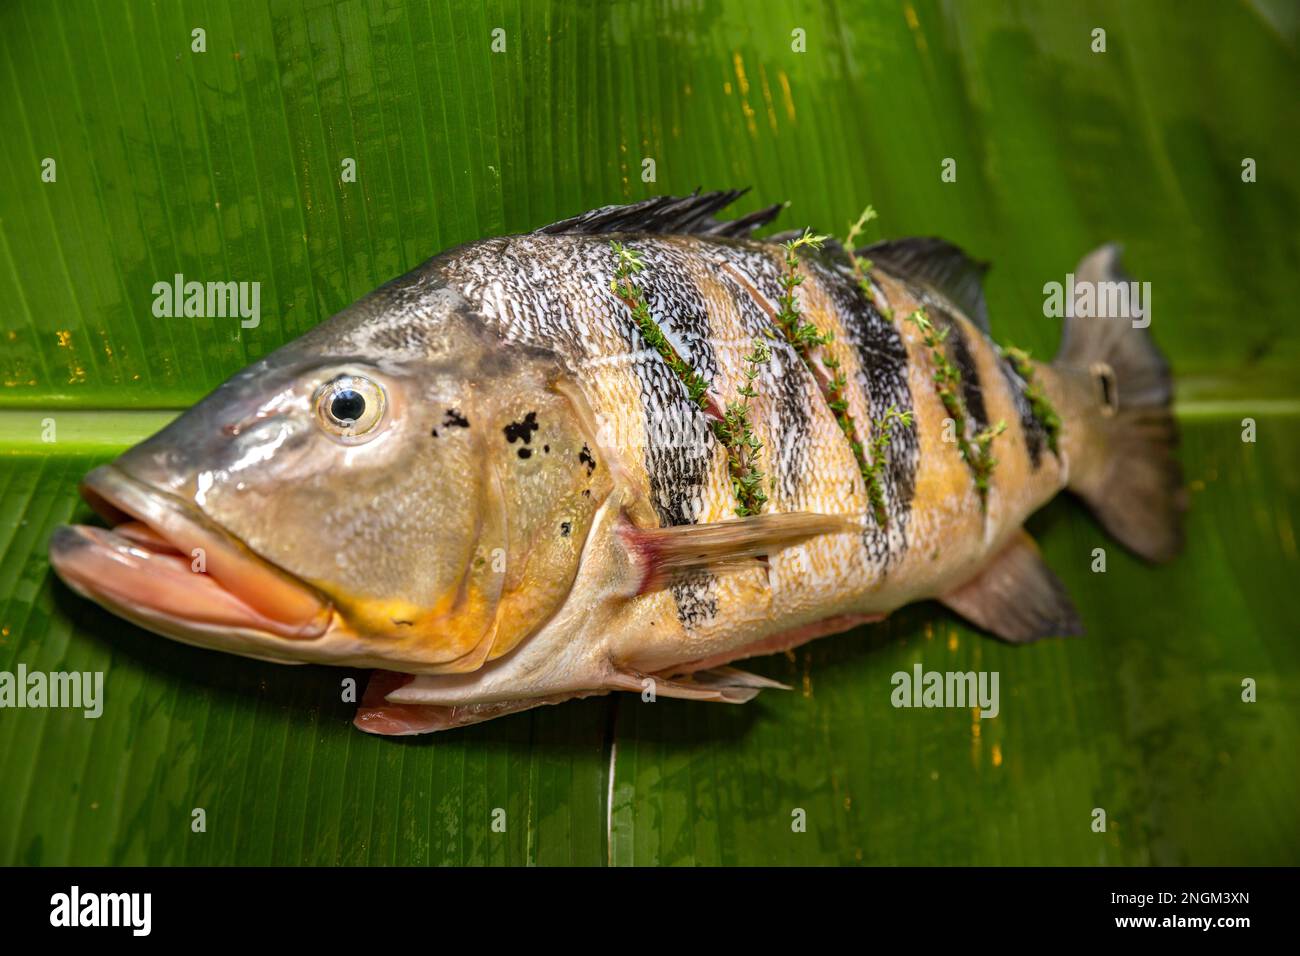 Wild Tucunaré tropical fish (Cichla ocellaris). Freshwater Amazonian fish closeup Stock Photo